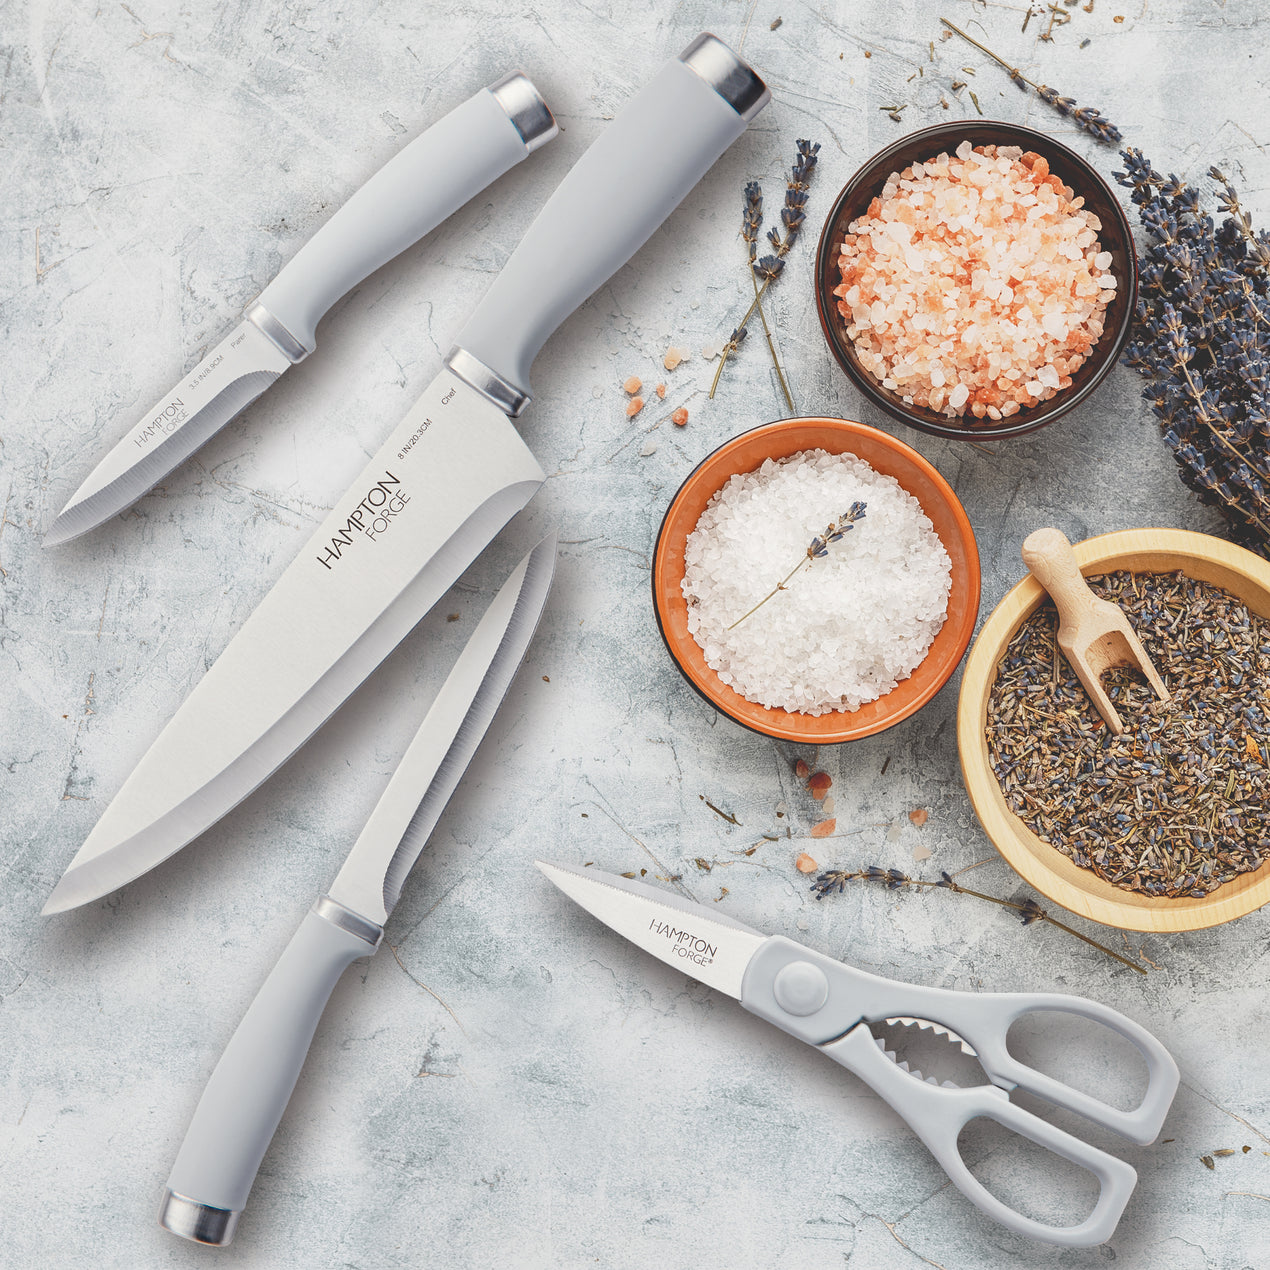 15 Pcs Black Knife Set Kitchen Block Chef Stainless Steel Knives